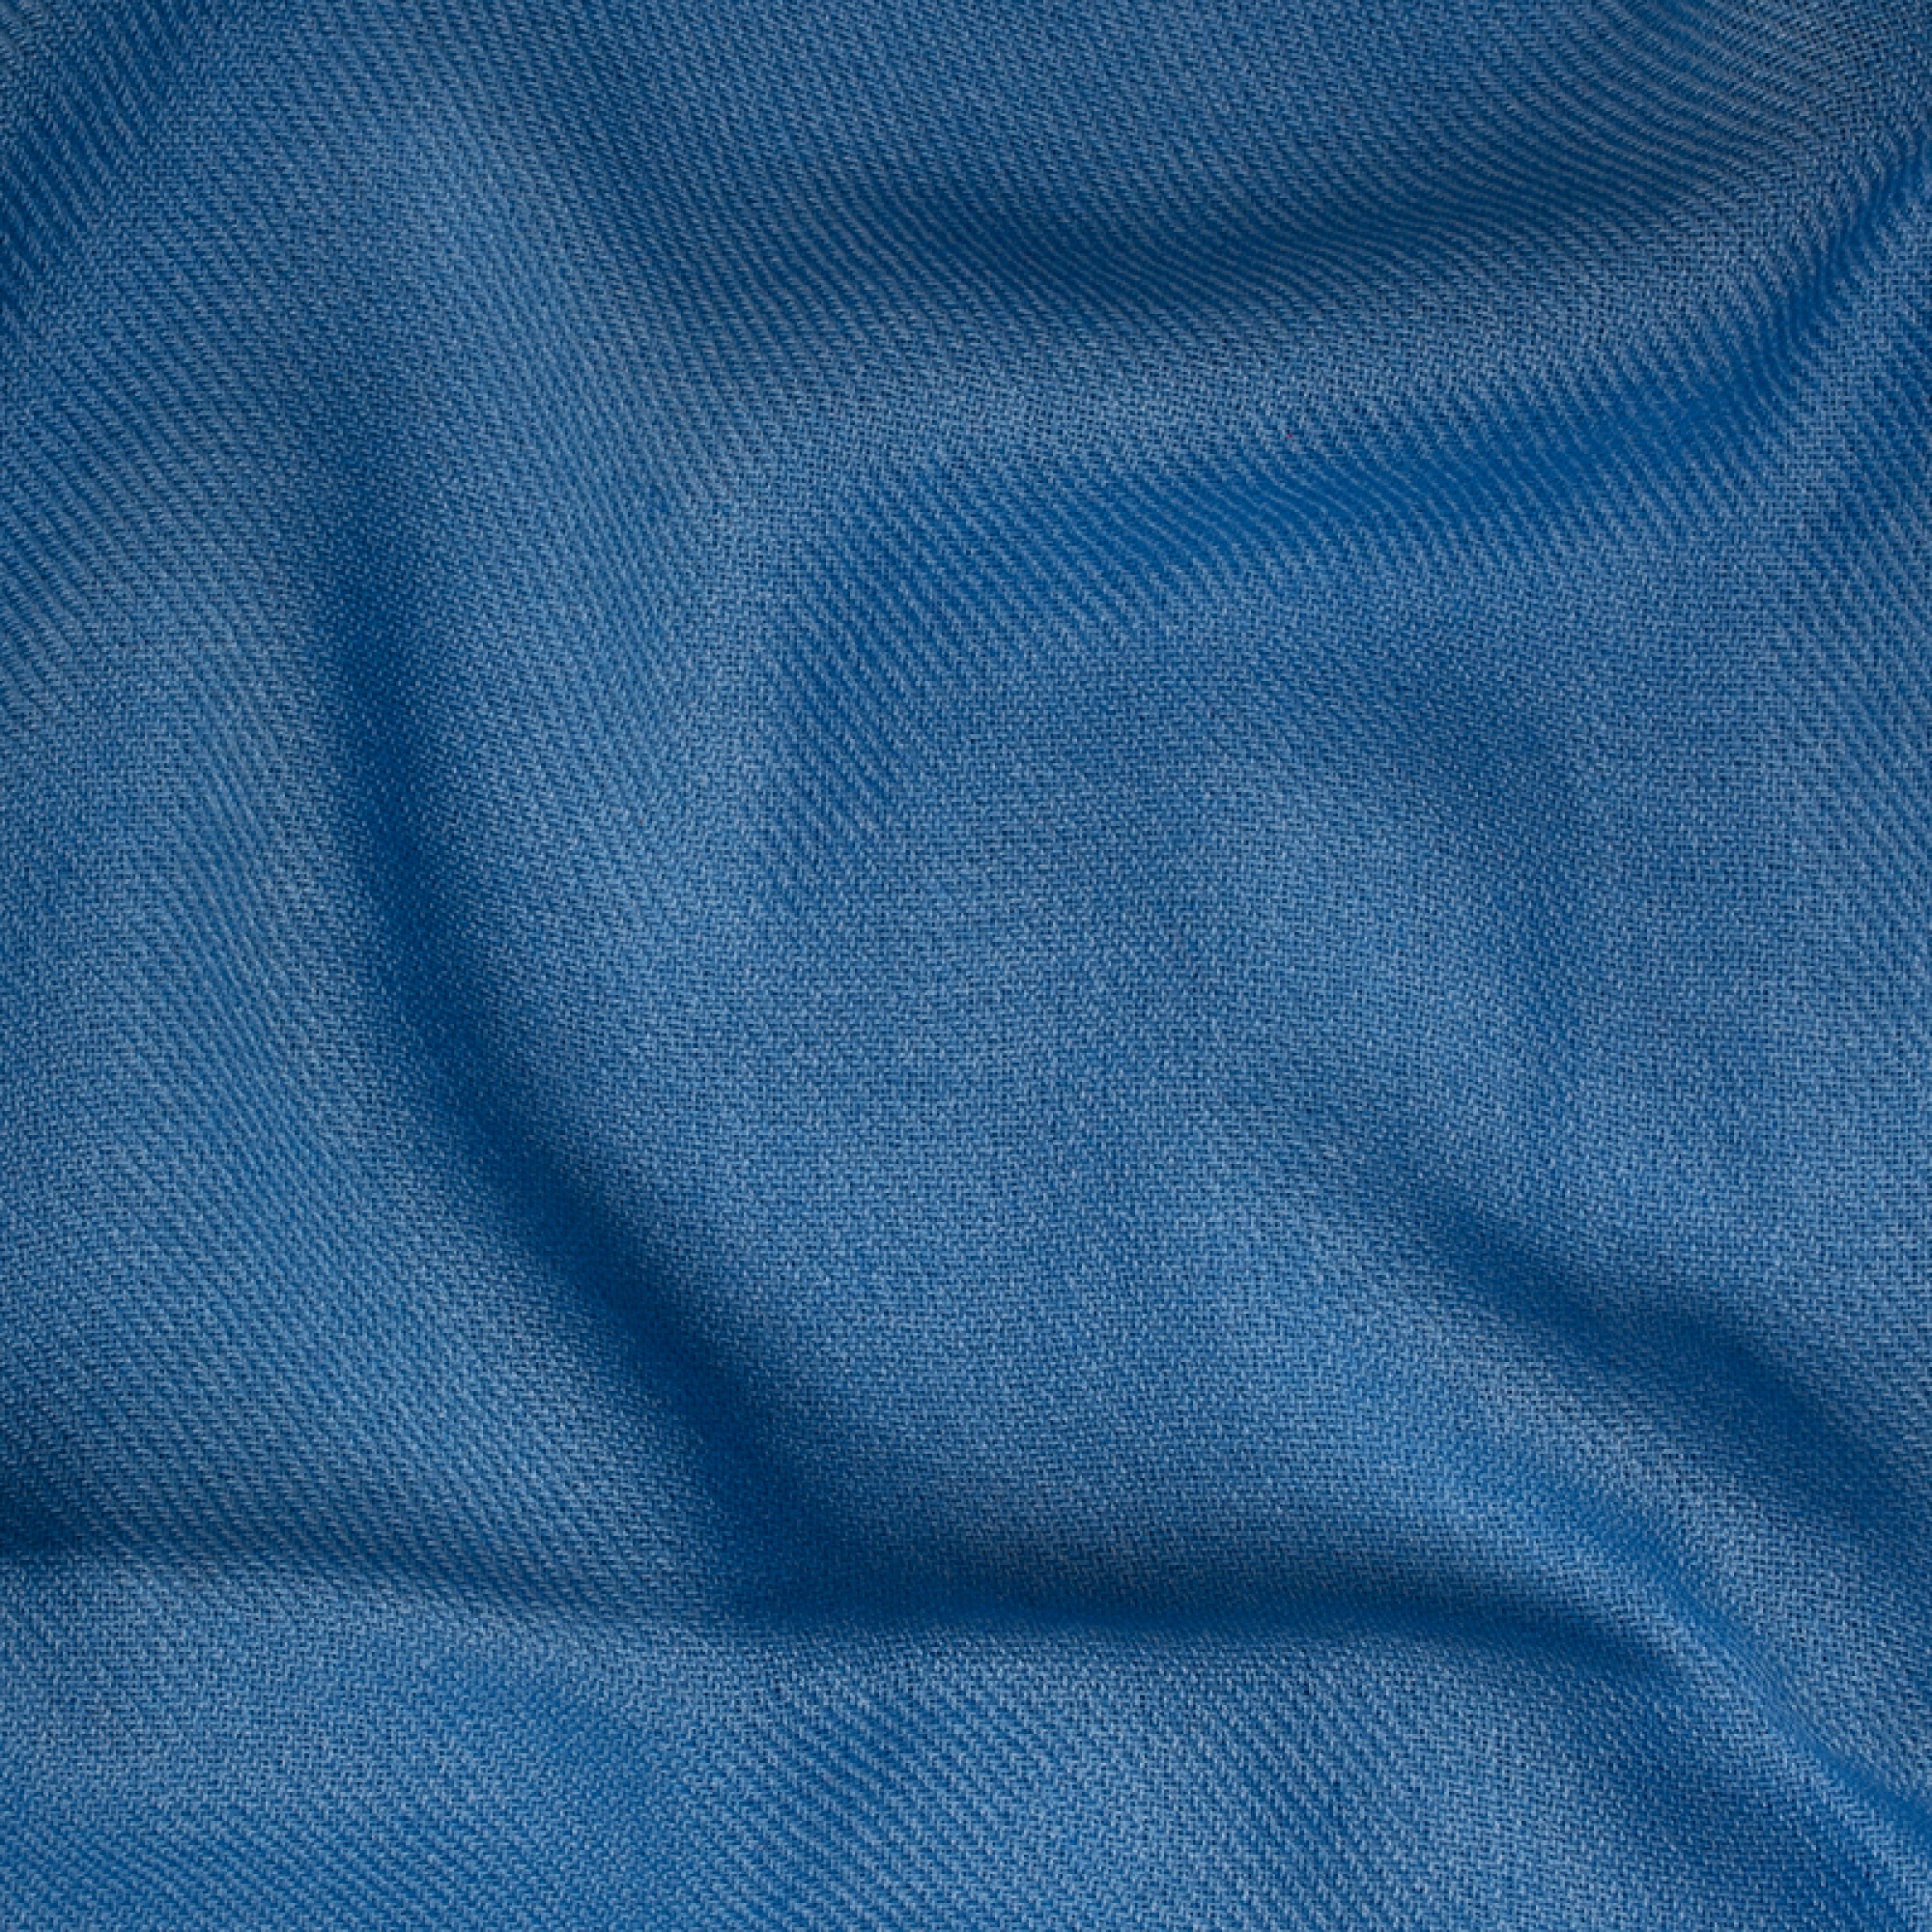 Cachemire pull homme toodoo plain s 140 x 200 bleu miro 140 x 200 cm